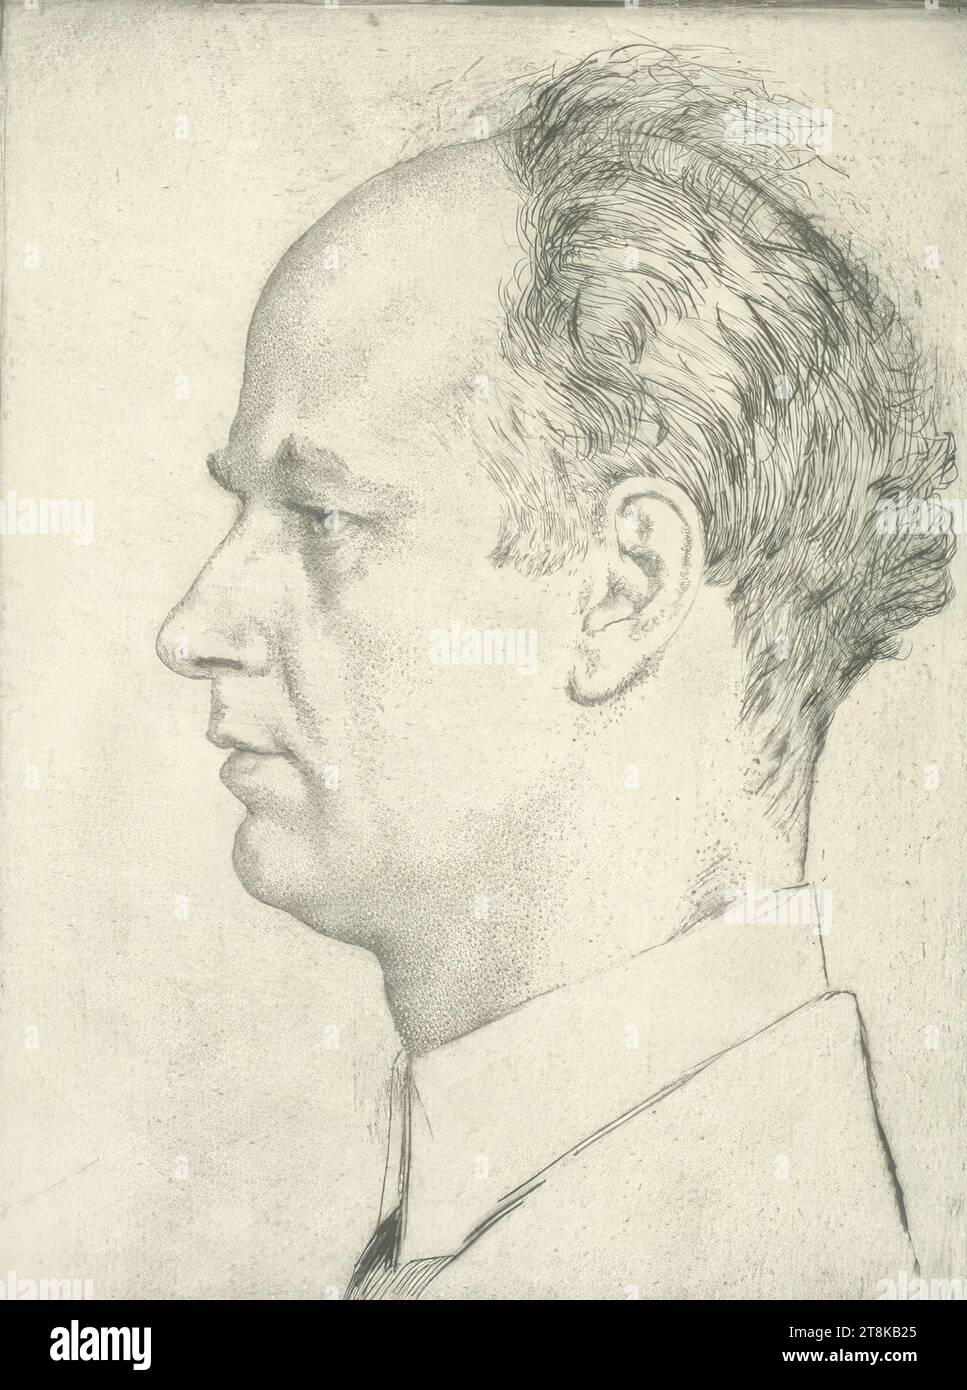 Wilhelm Furtwängler, Emil Orlik, Prague 1870 - 1932 Berlin, approx. 1910 - 1920, prints, etching; Roulette; drypoint; Japanese paper, plate: 23.9 cm x 18.0 cm, l.l. 'Pr.', Pencil Stock Photo